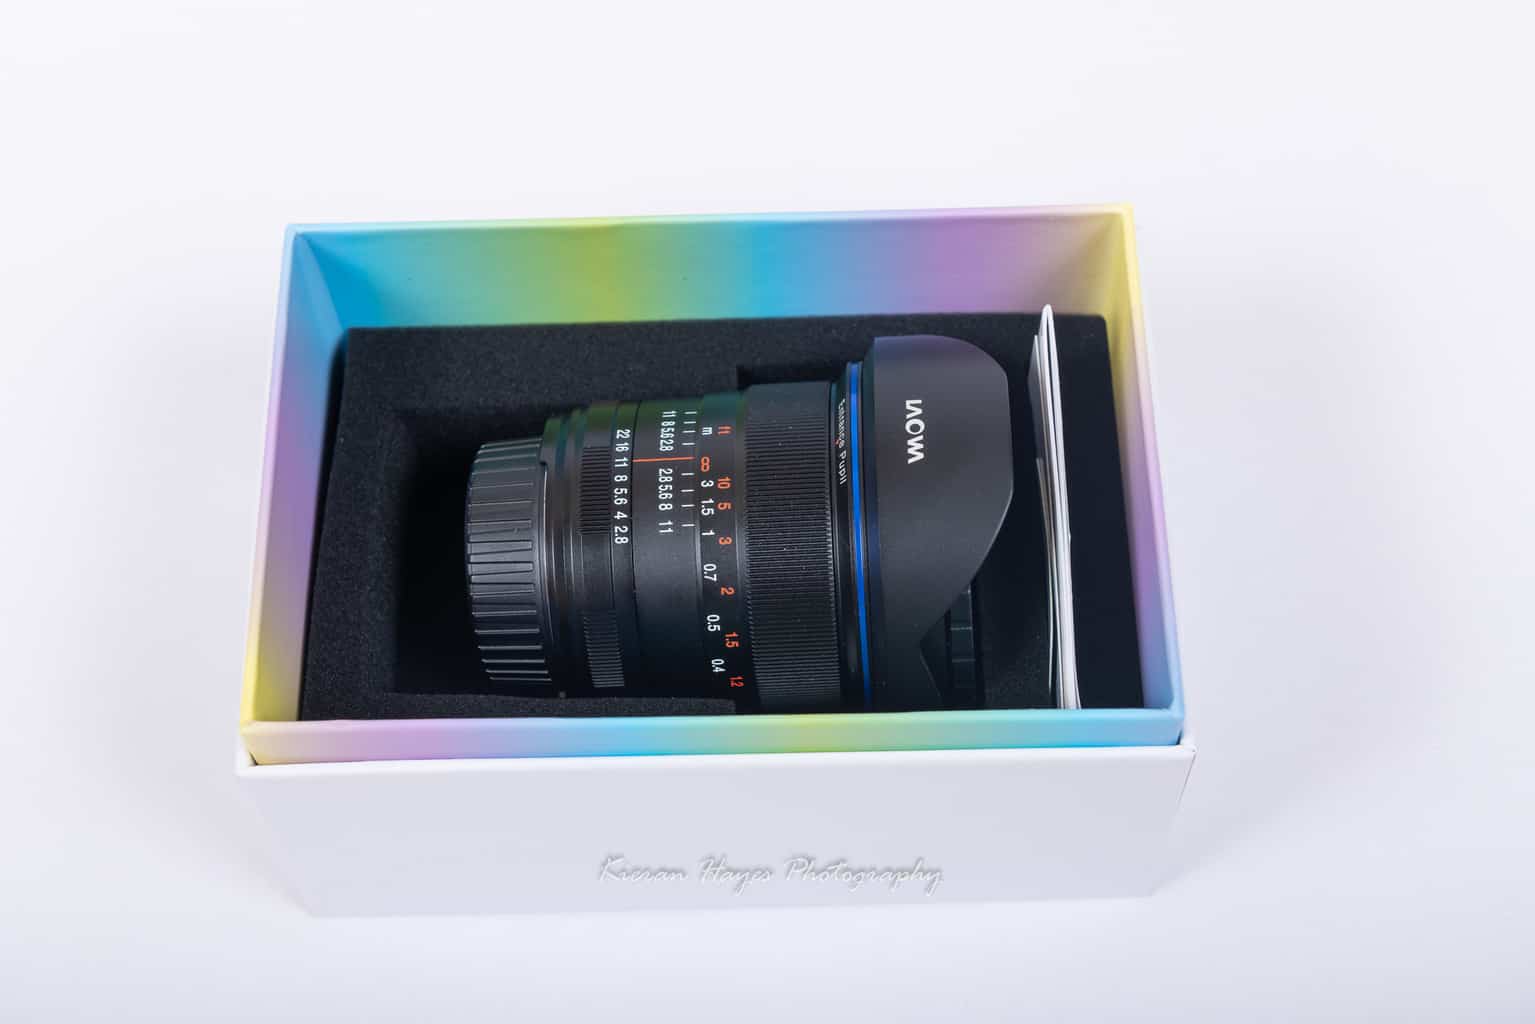 Venus optics Laowa 12mm F2.8 Zero-D lens review.